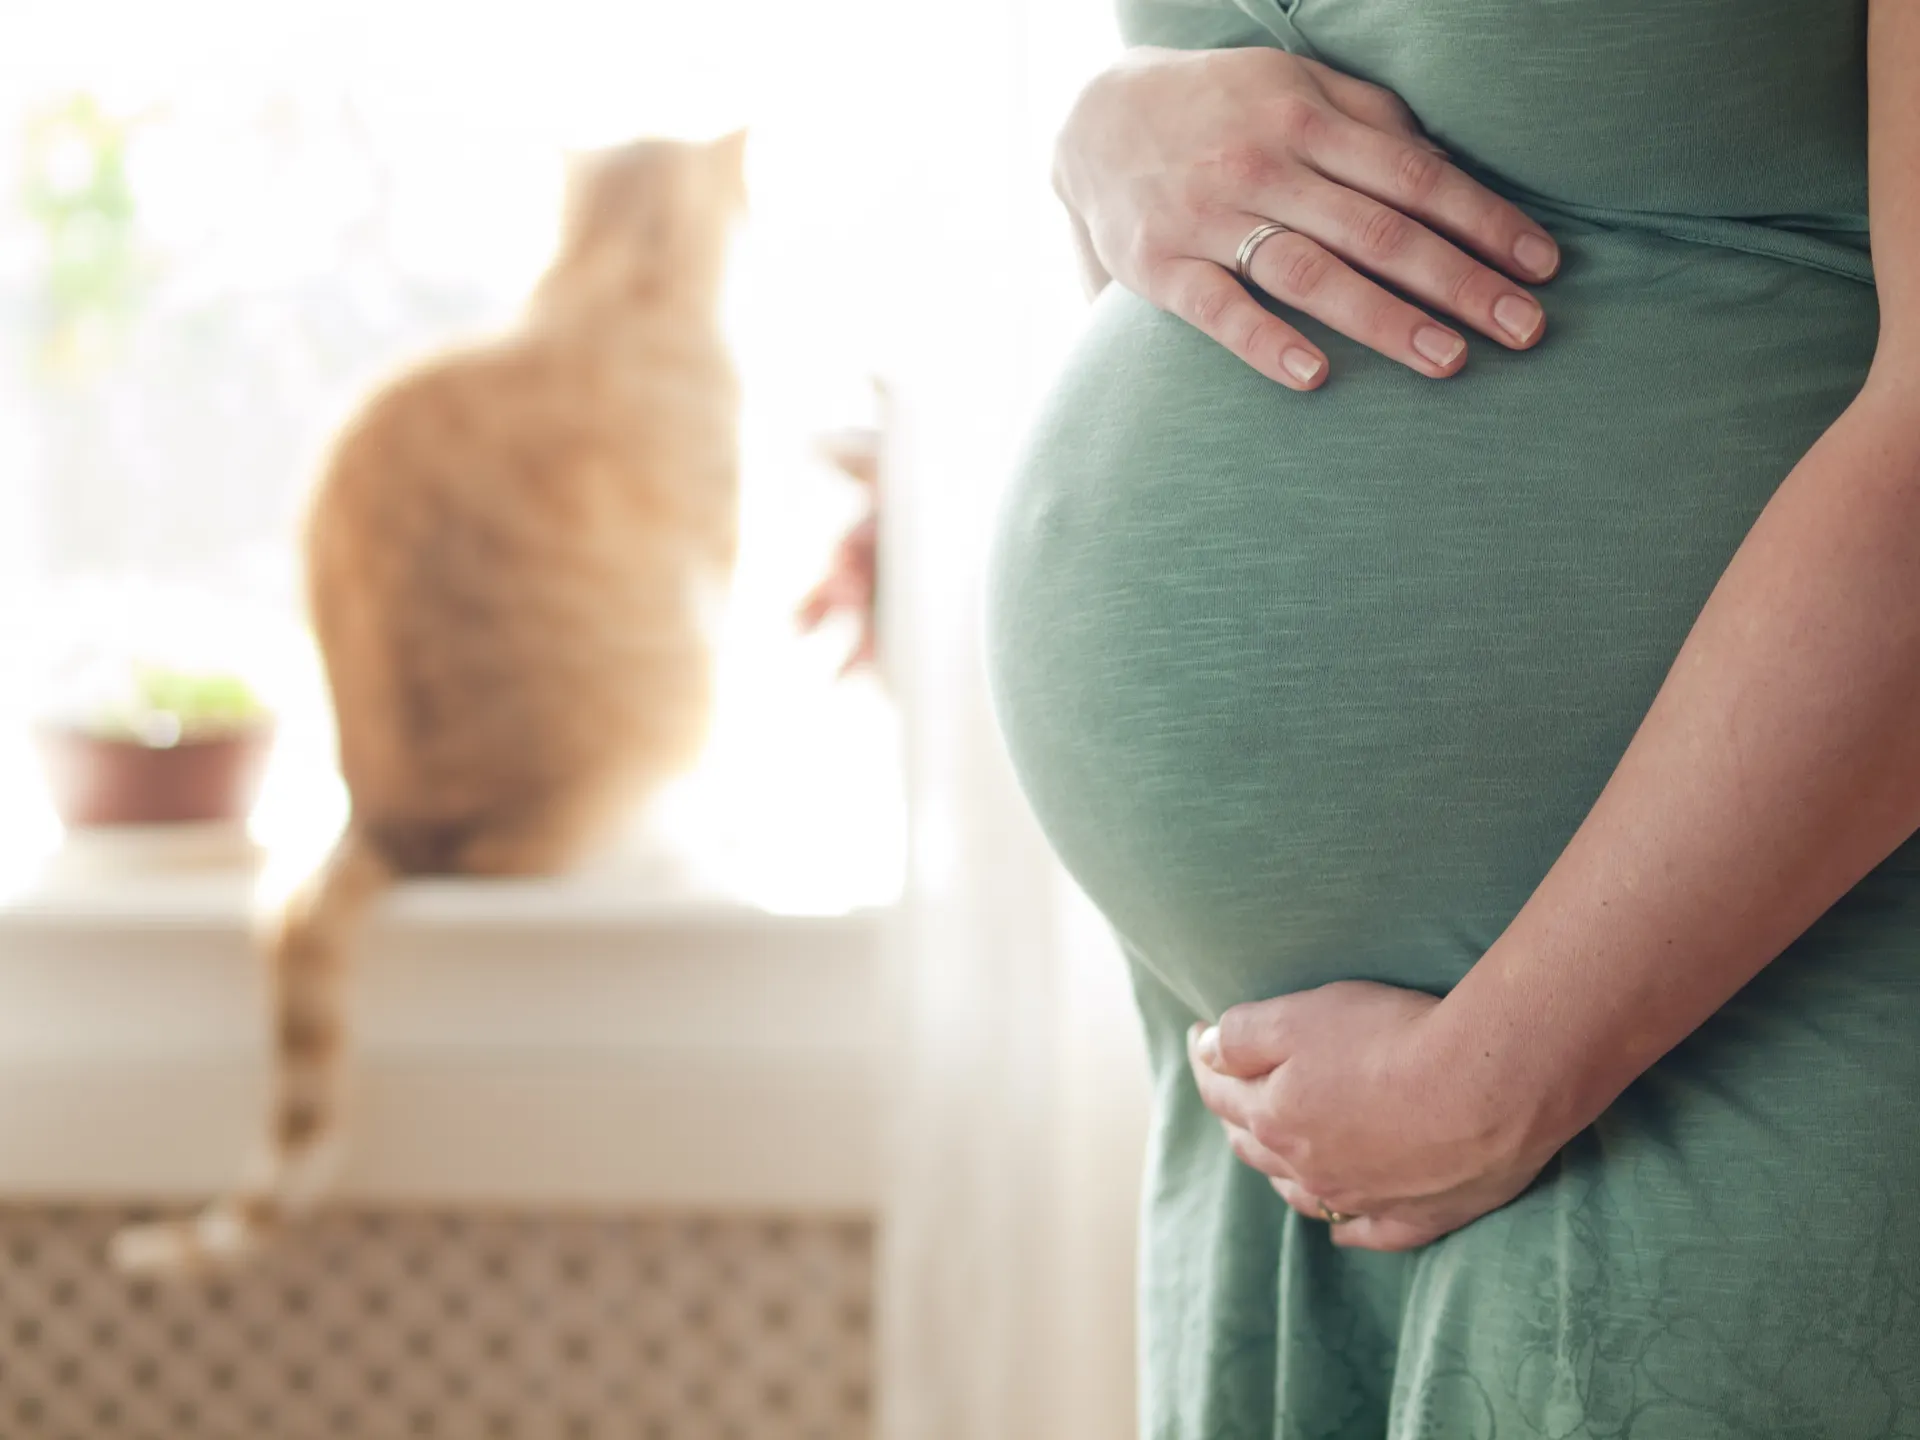 Pregnant women should take precautions to avoid toxoplasmosis